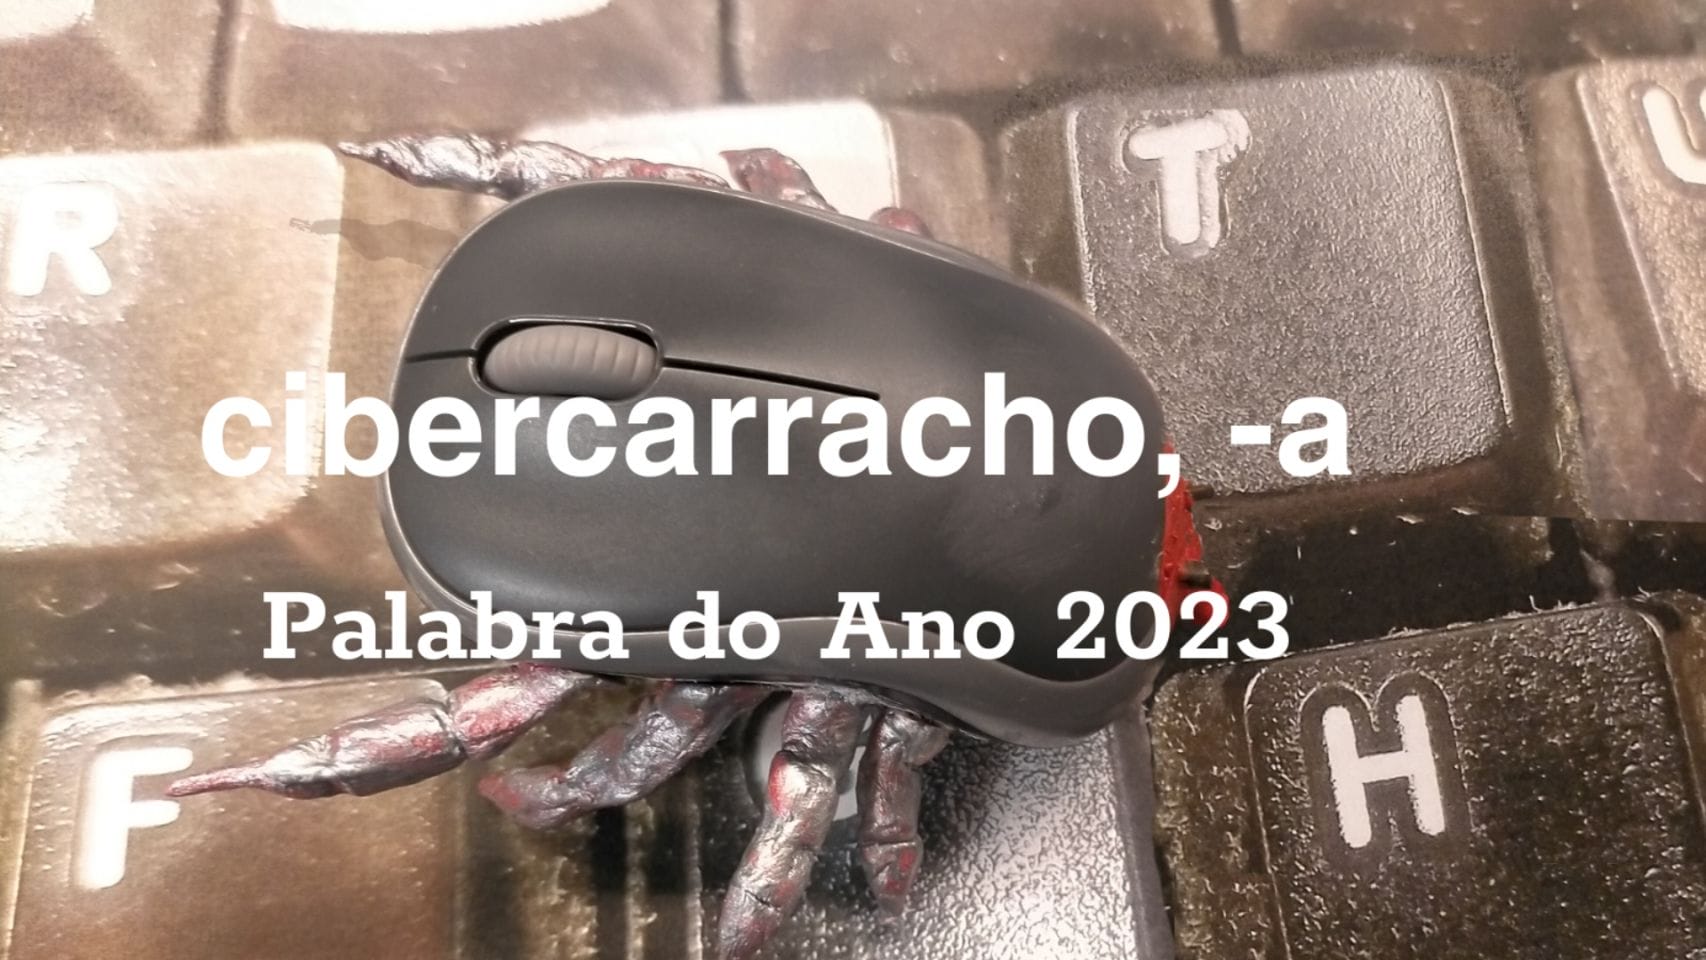 'Cibercarracho' ha sido elegida la Palabra del Año 2023